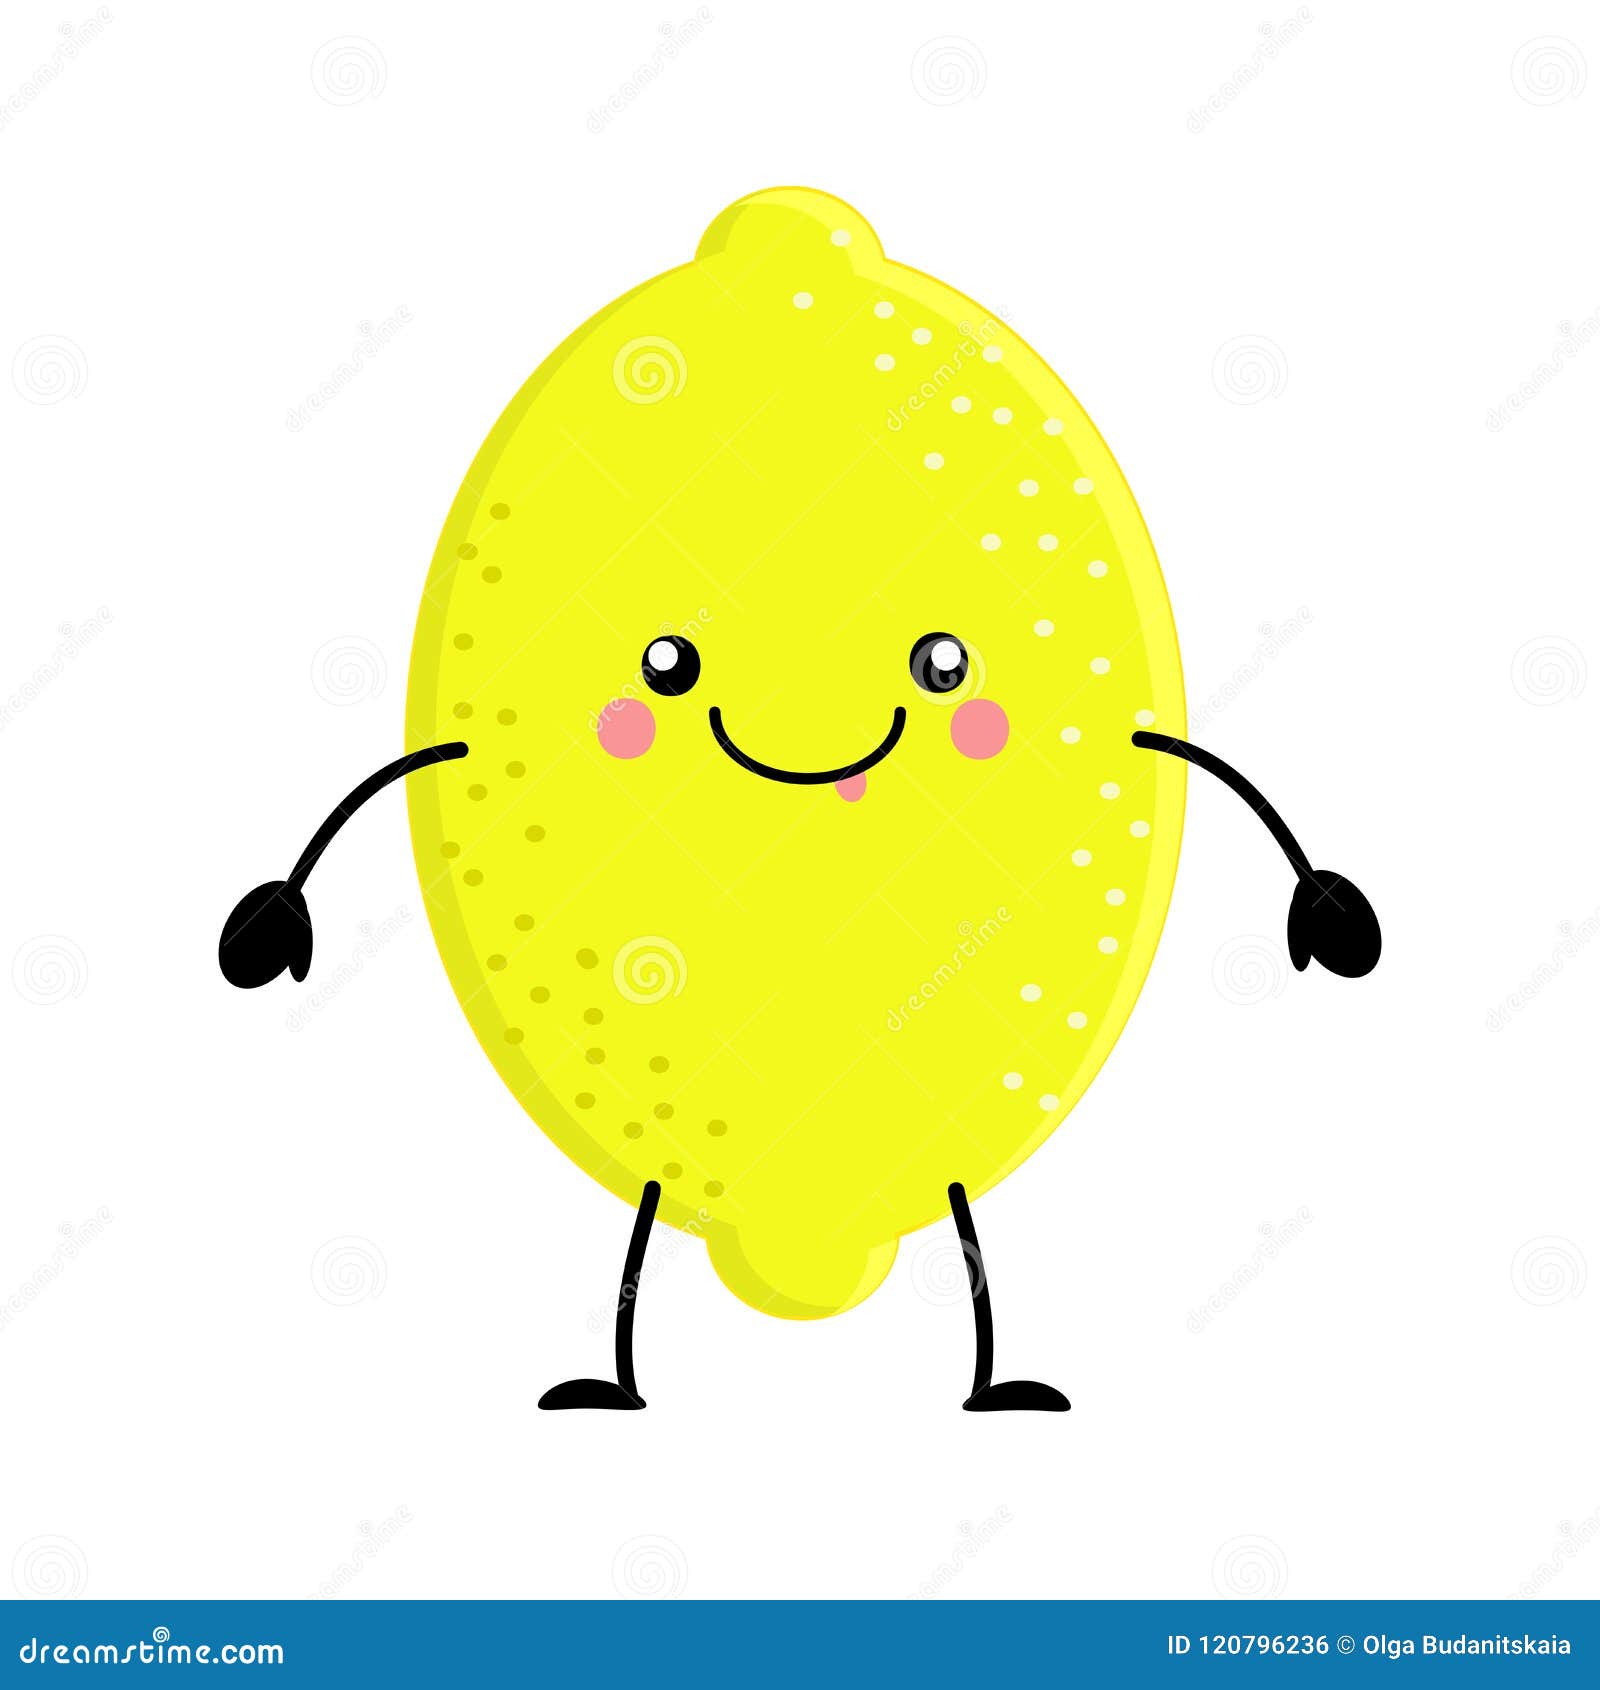 Cute Cartoon Lemon. Kawai Lemon Vector Illustration Isolated on Stock ...